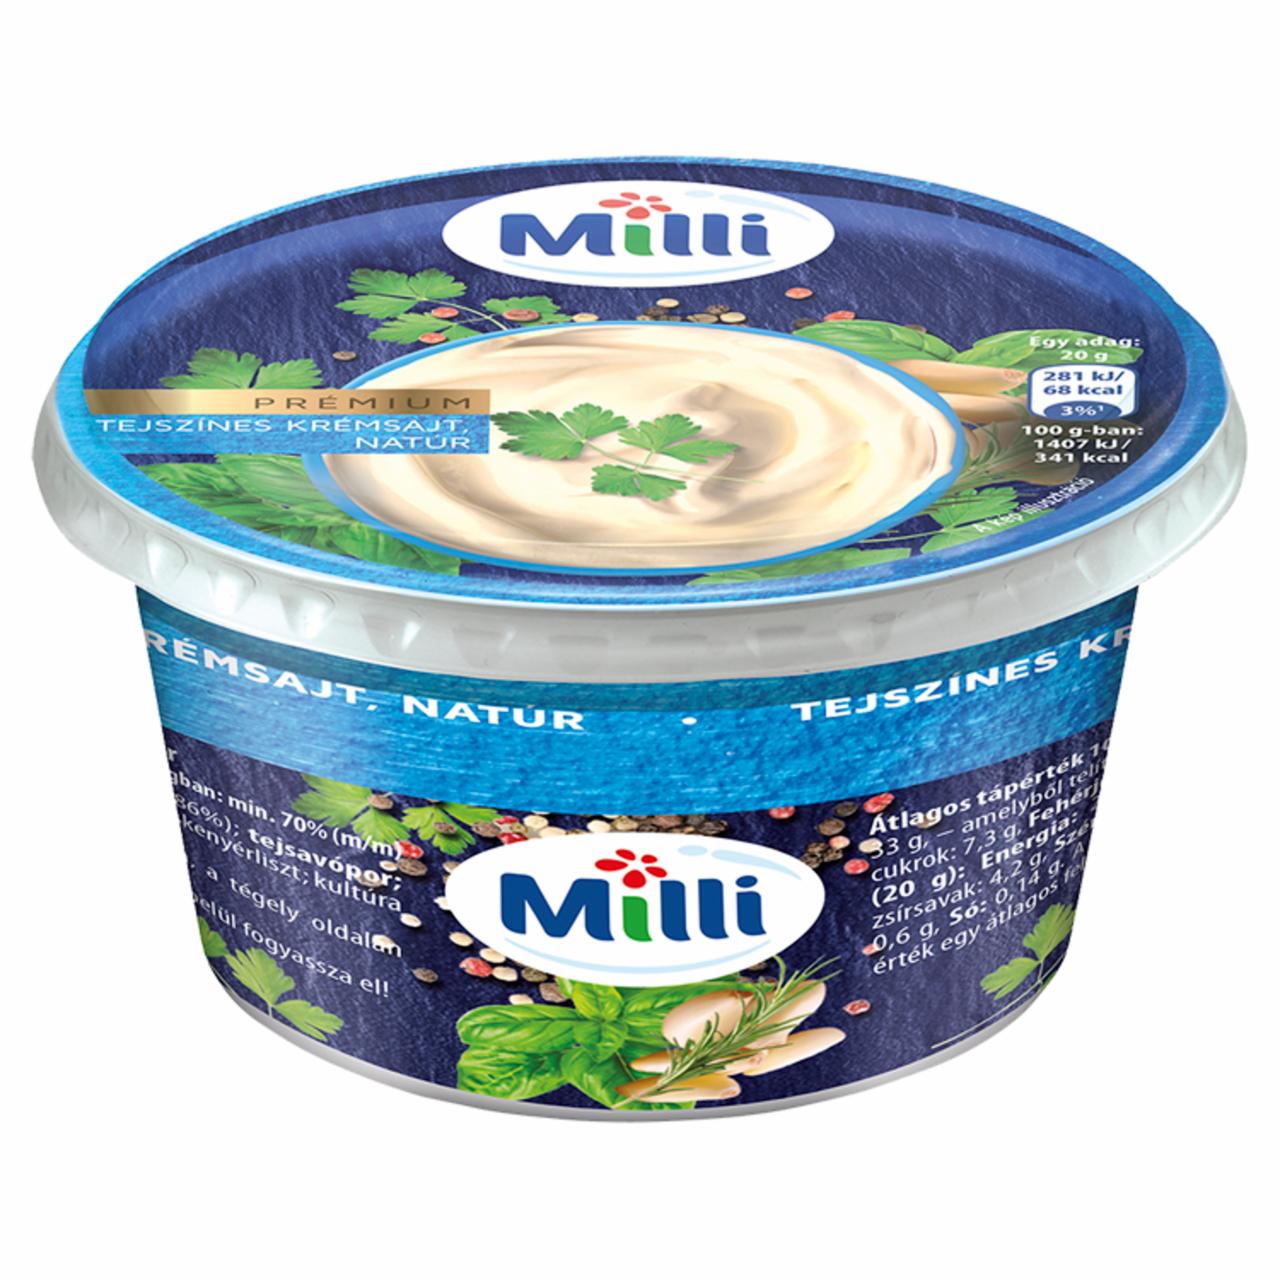 Képek - Milli Prémium tejszínes krémsajt, natúr 125 g